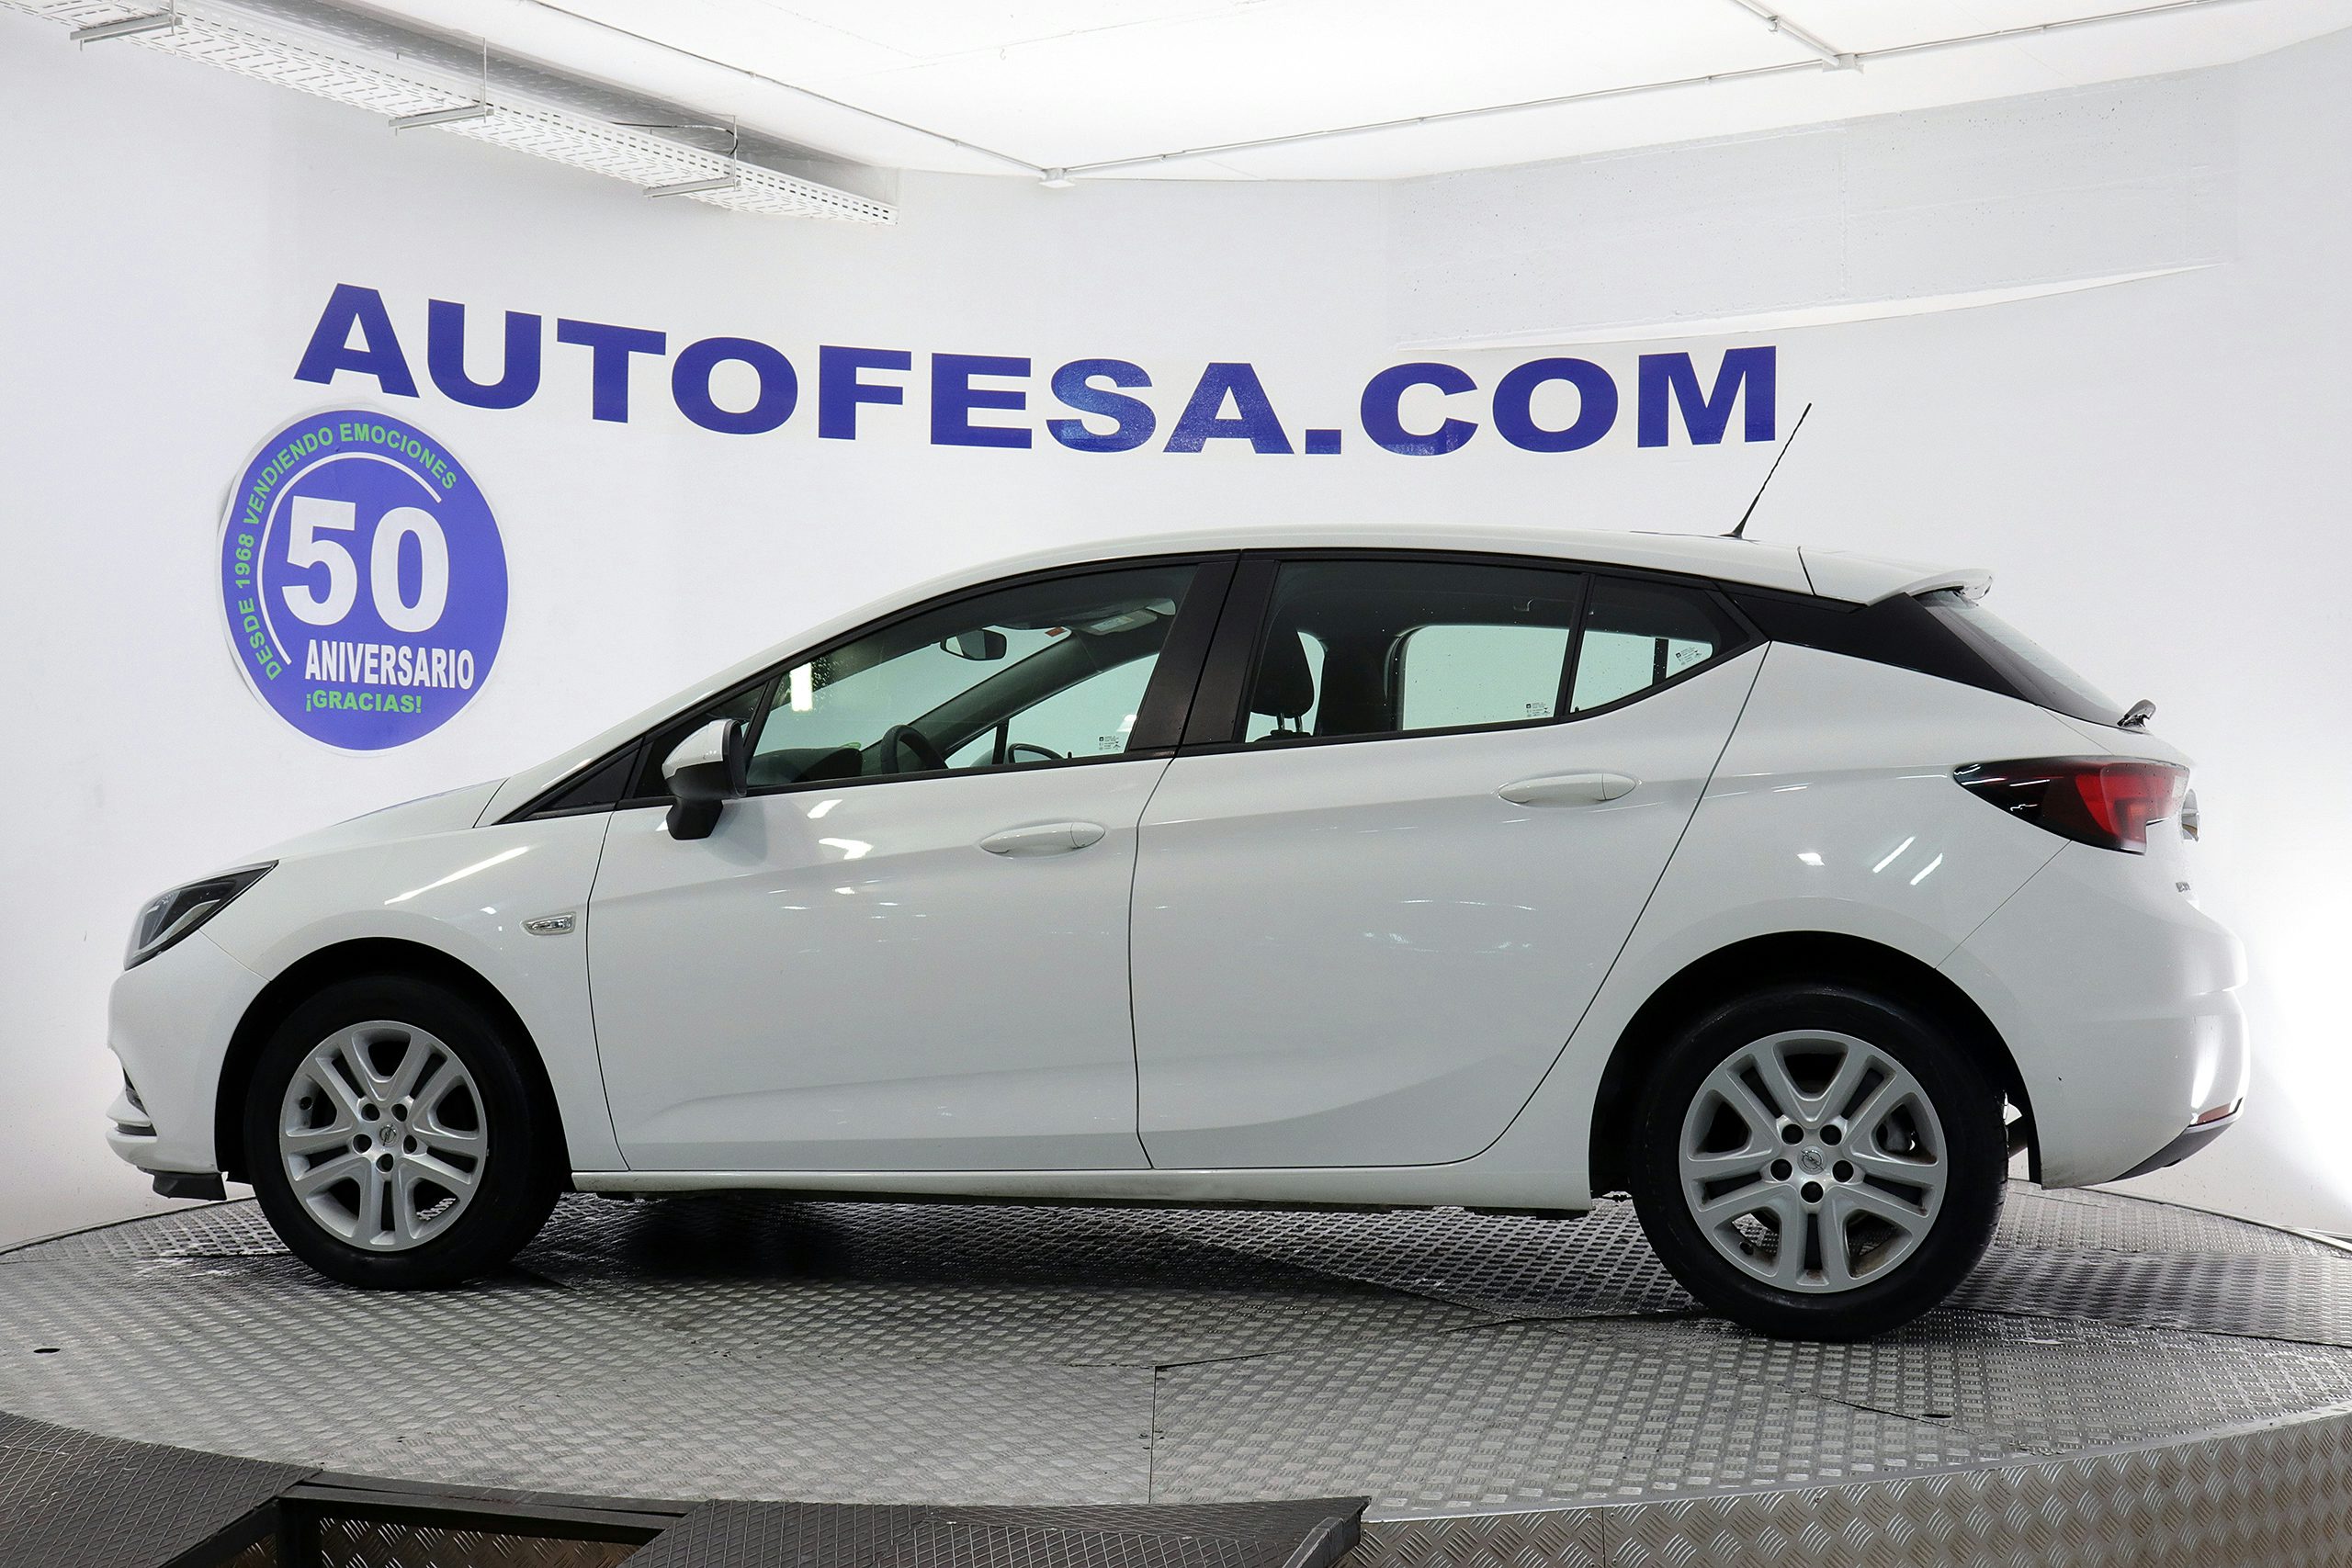 Opel Astra 1.6 CDTi 110cv Selective 5p - Foto 3